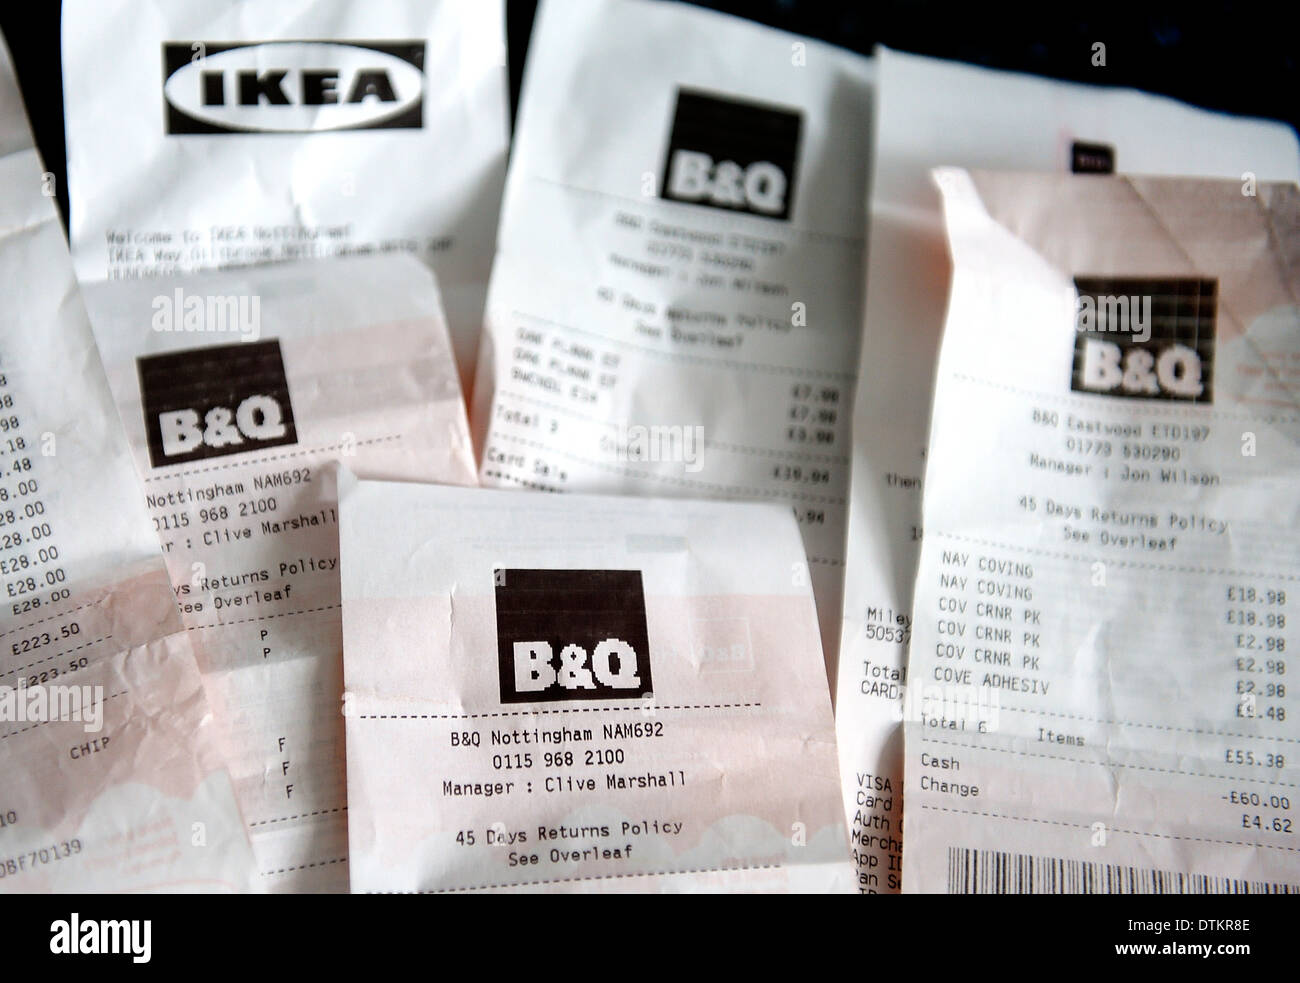 Shopping receipts Ikea and B & Q Stock Photo: 66818206 - Alamy